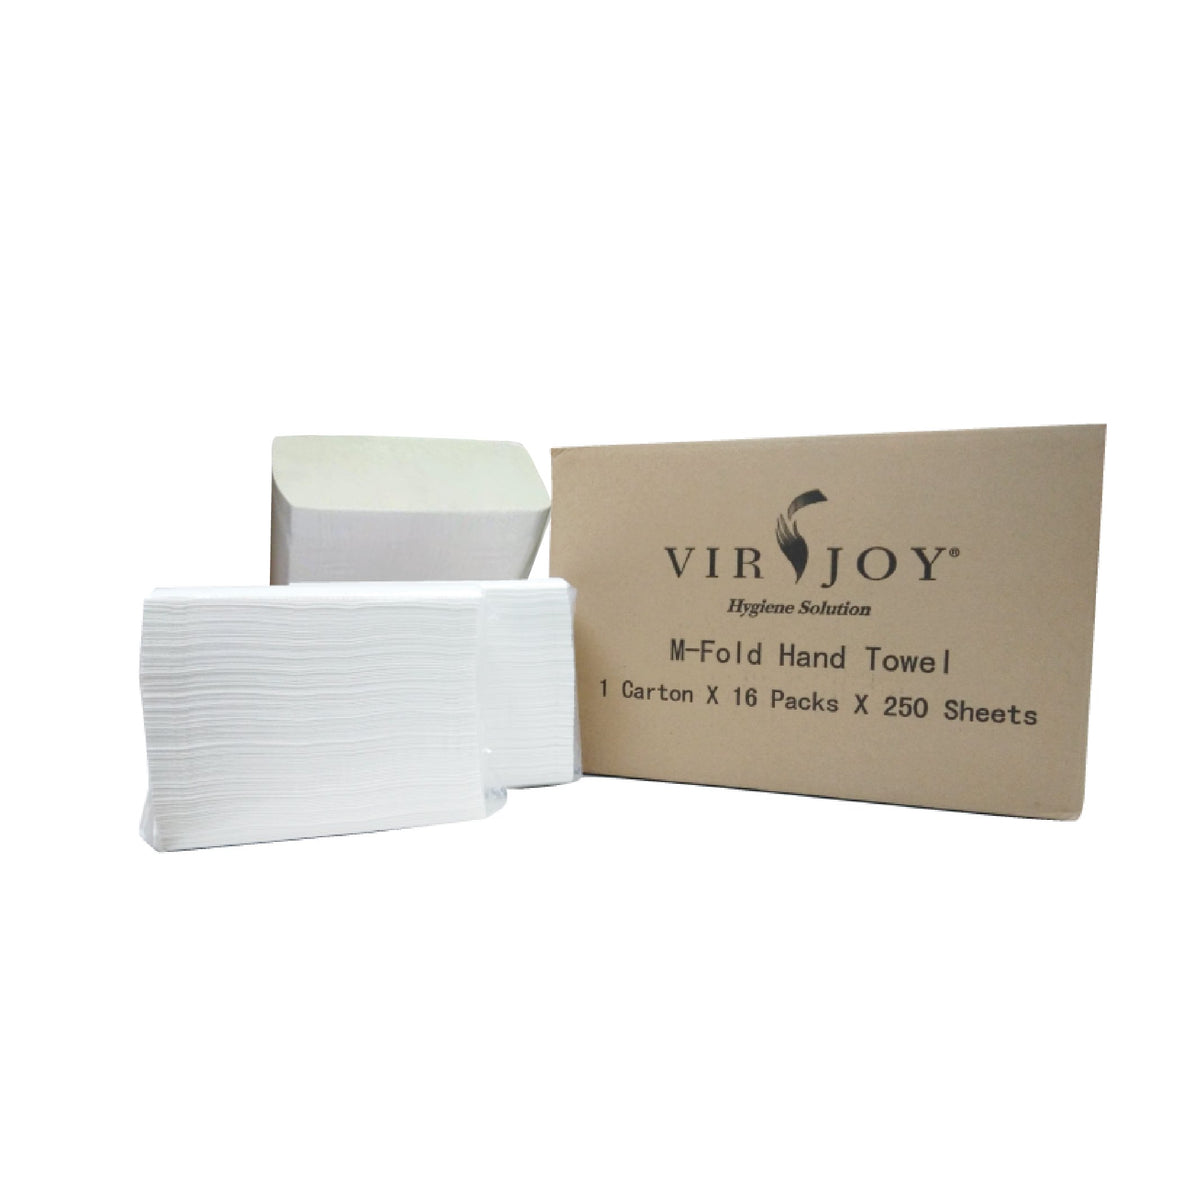 Virjoy Hygiene Solution M-Fold Towel 16 Packs/Case